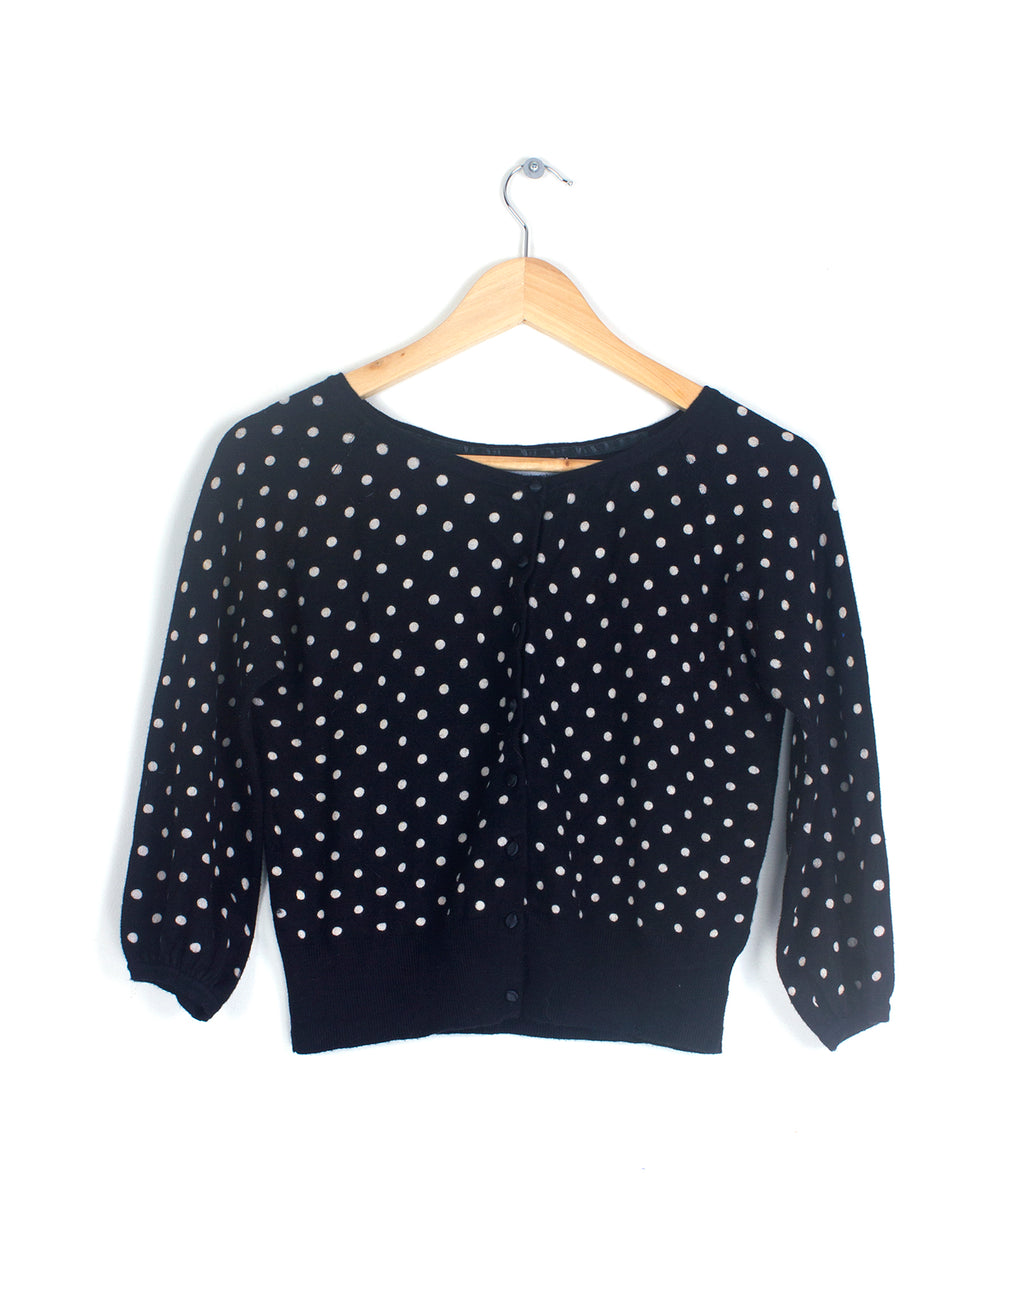 Black & White Polka Dot Crop Cardigan - Size 8